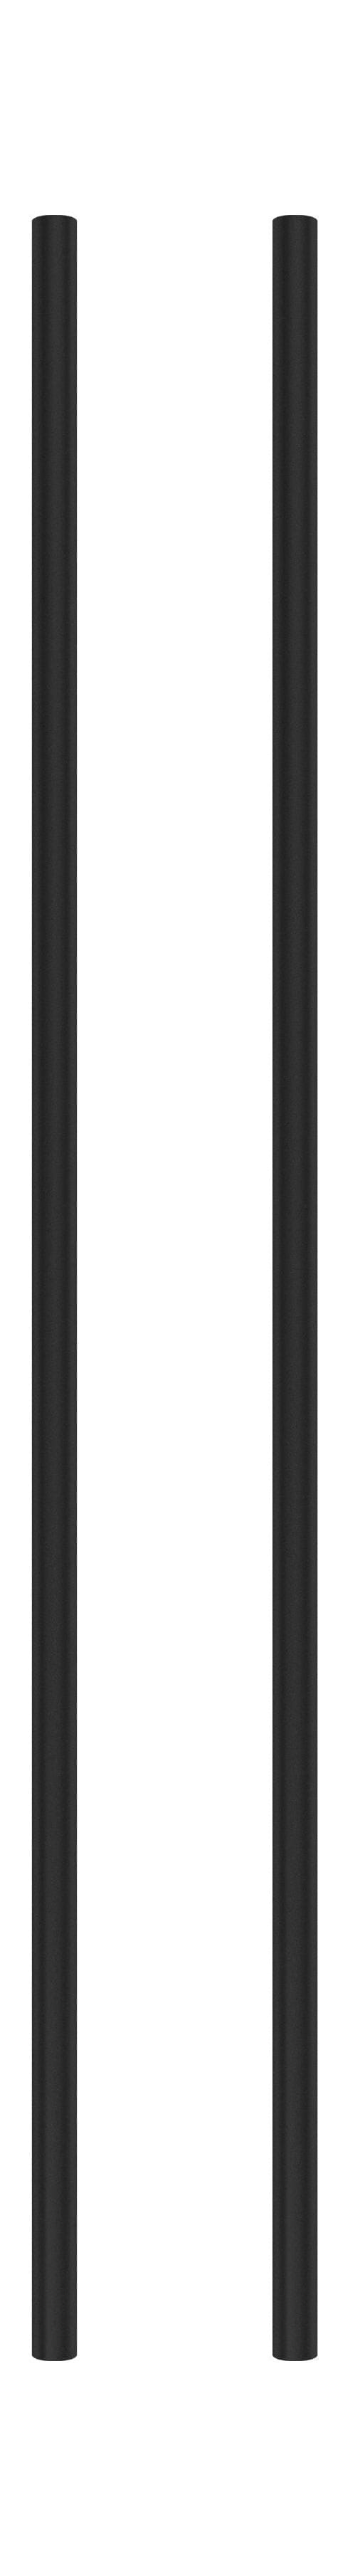 Moebe Shelving System/Wall Shelving Leg 85 Cm Black, Set Of 2